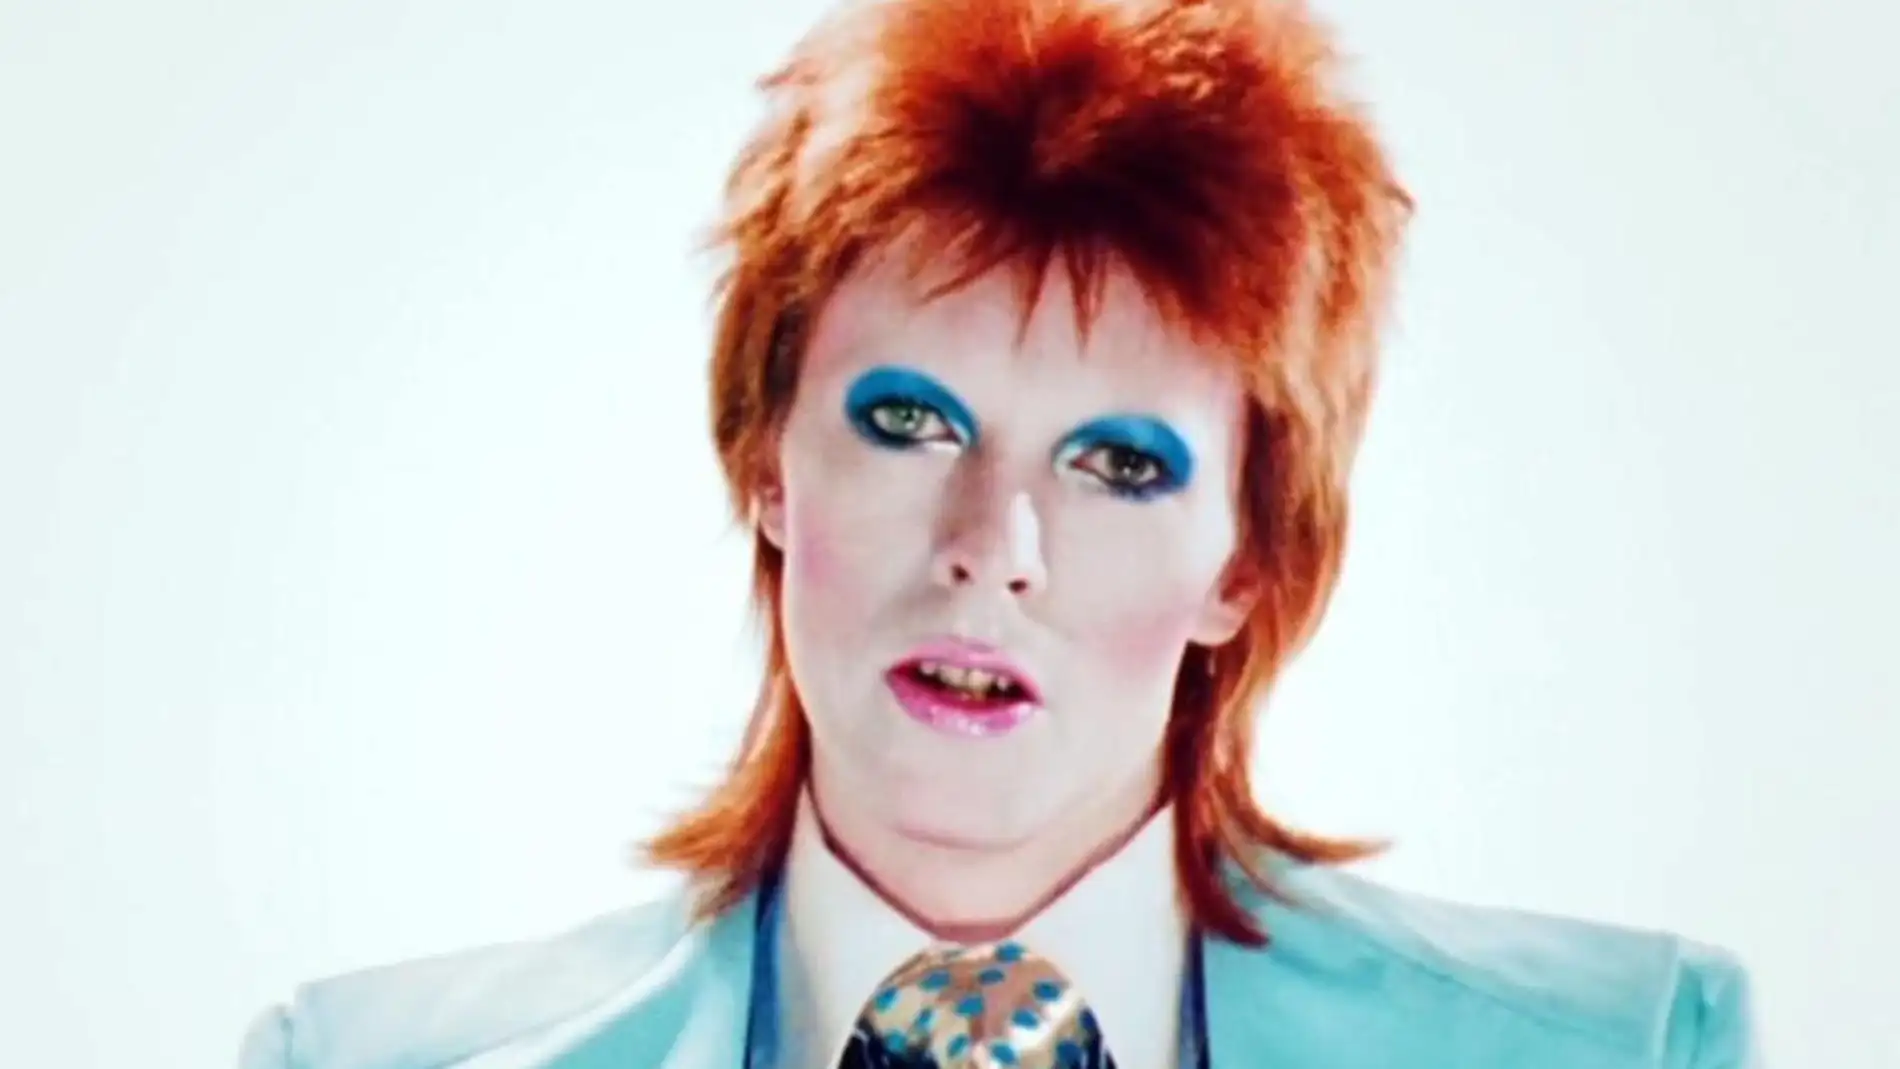 David Bowie en su disco 'Ziggy Stardust' title=